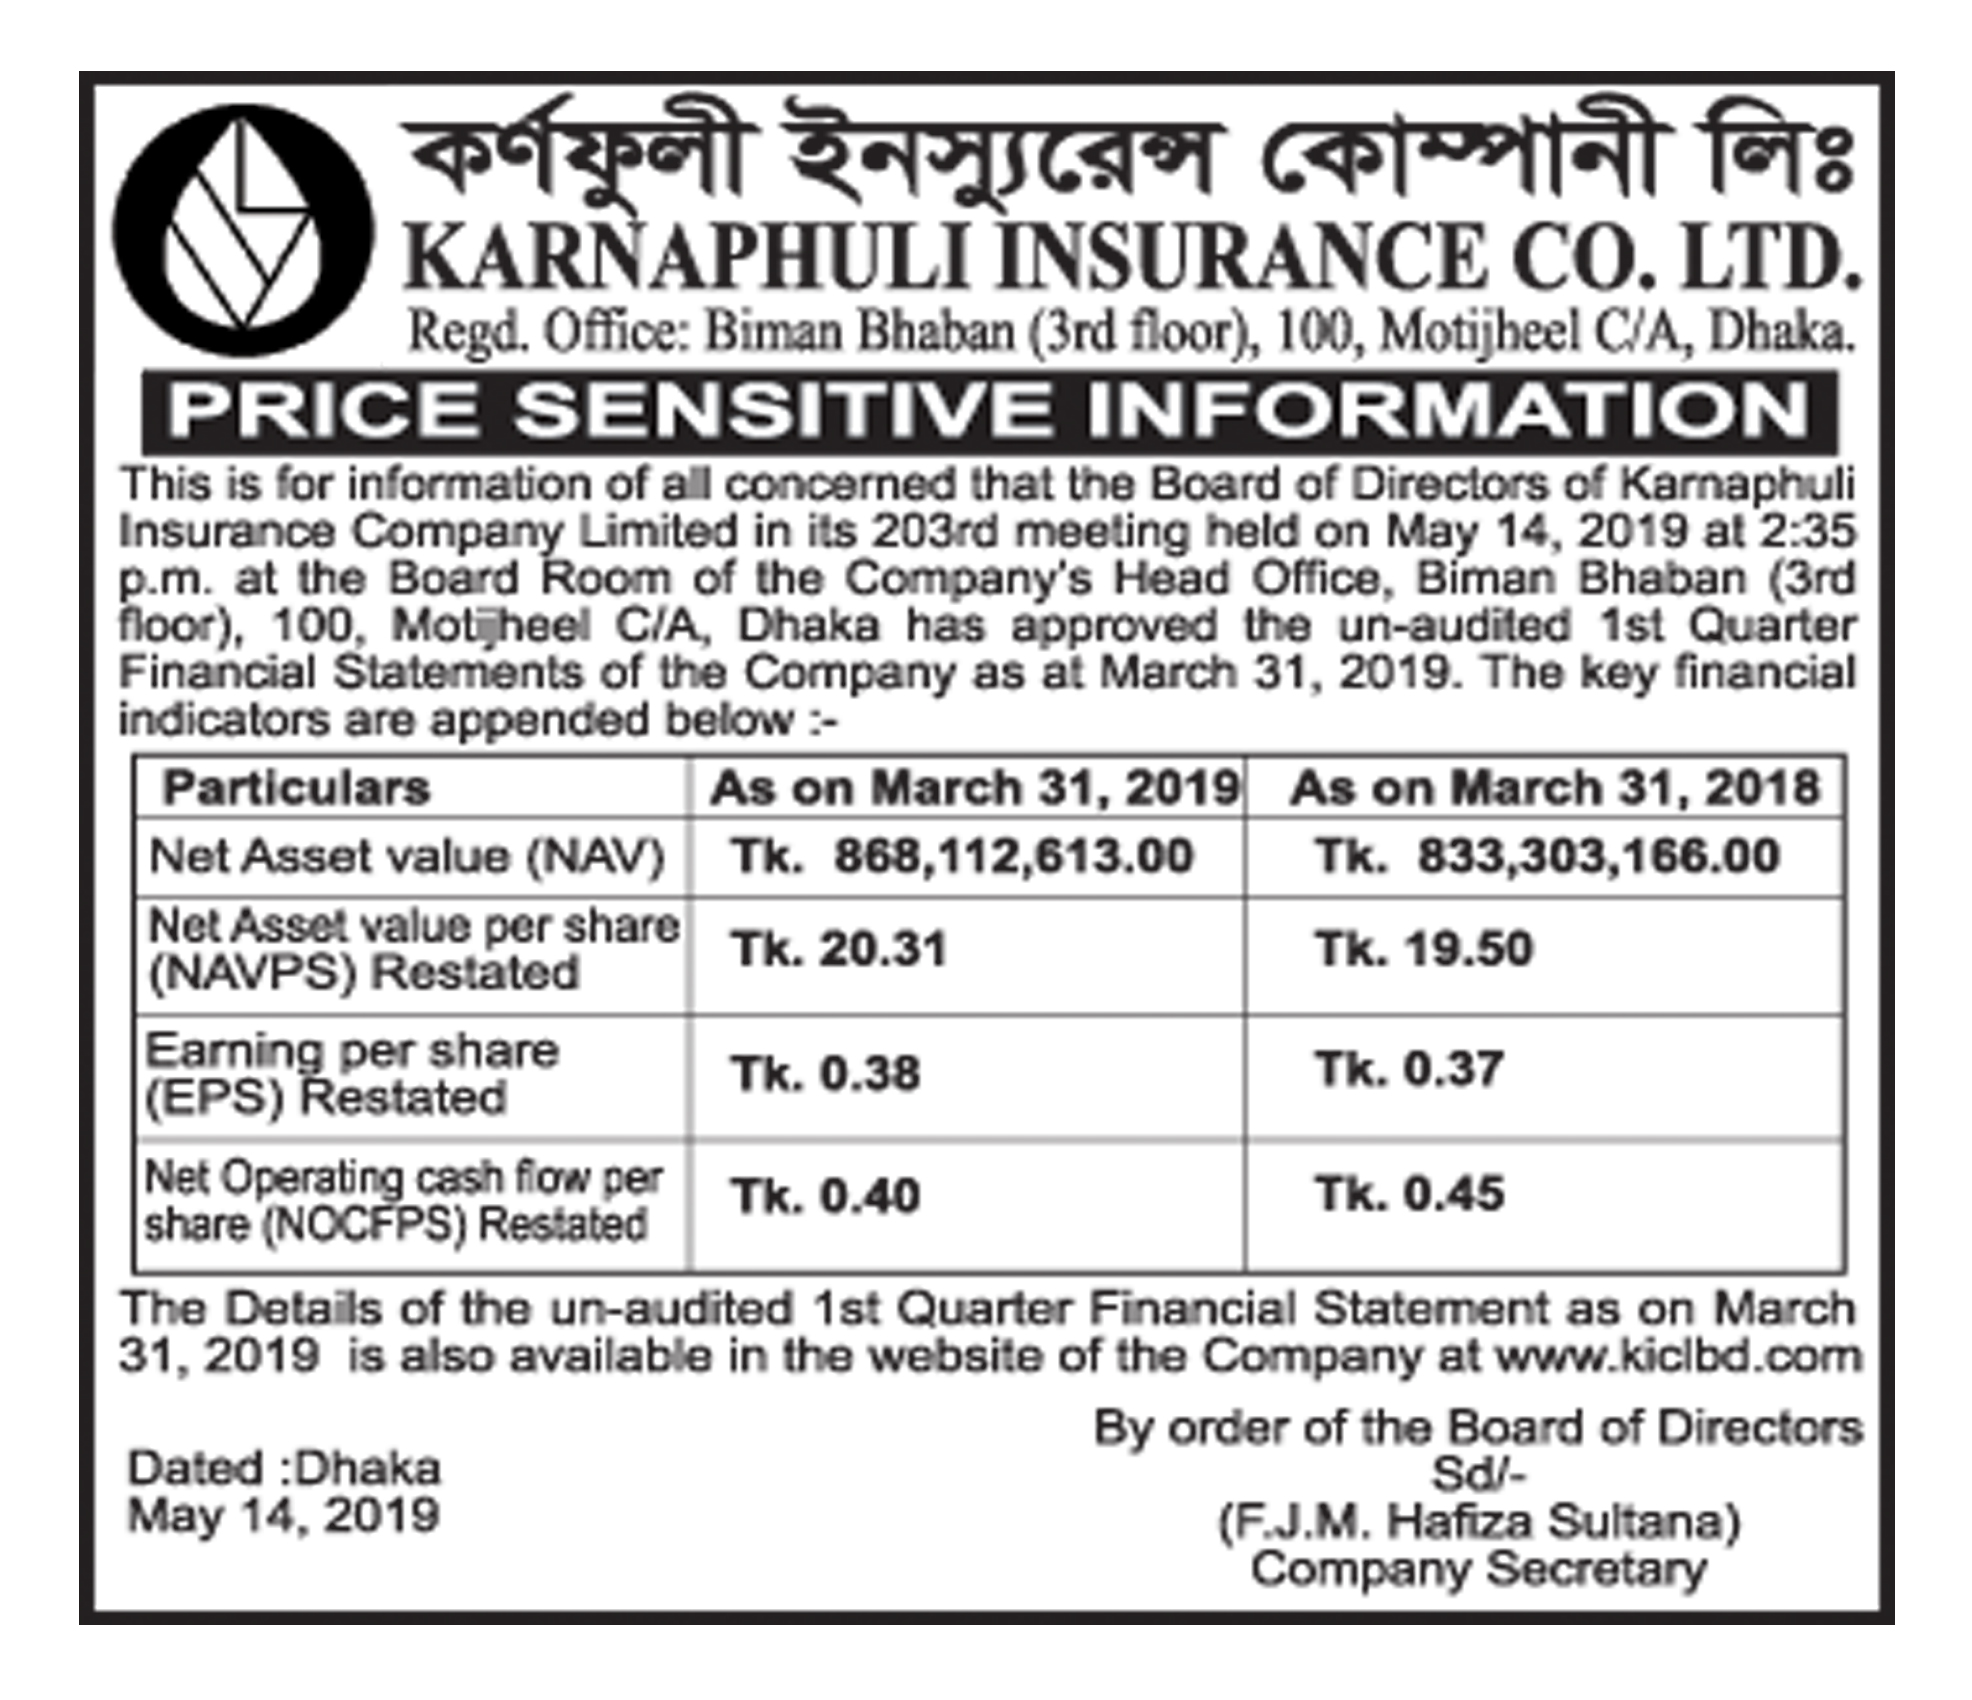 Price Sensitive Information Of Karnaphuli Insurance Co Ltd